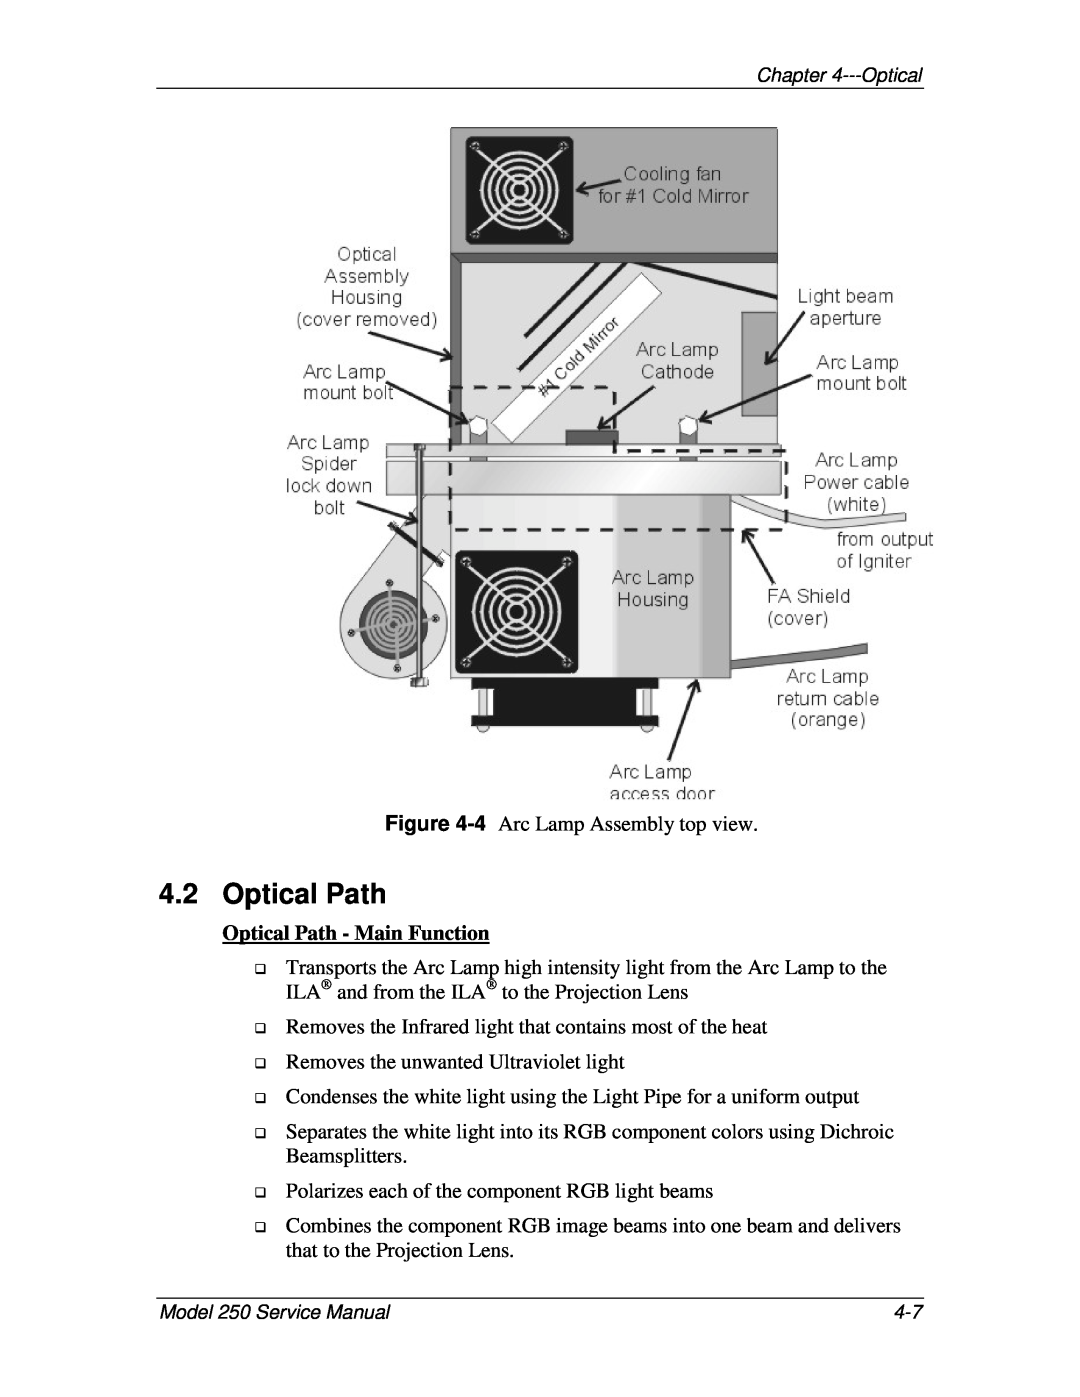 JVC 250 service manual Optical Path - Main Function 